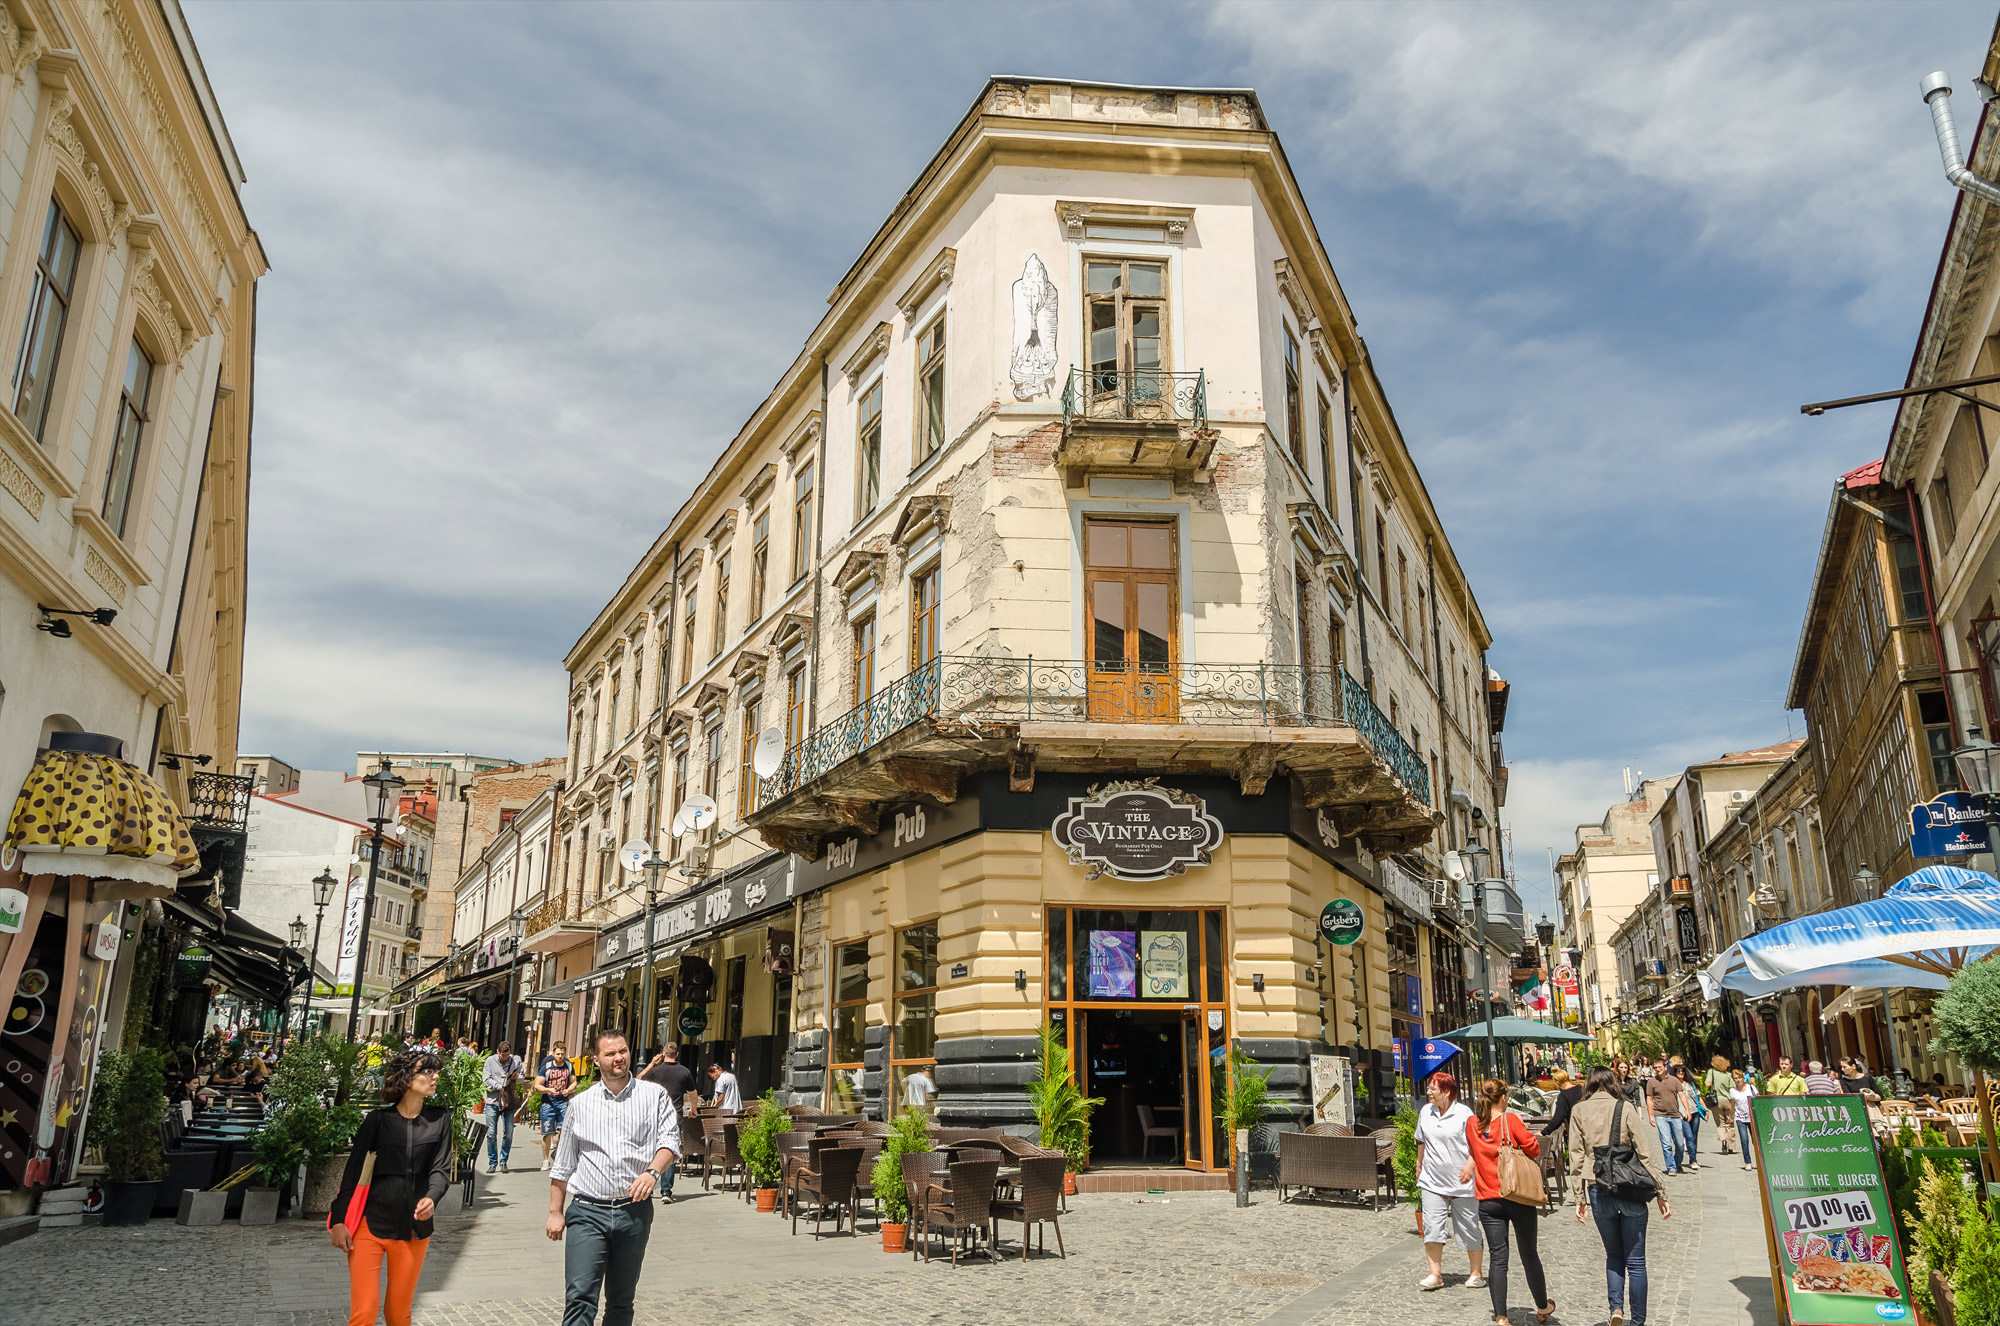 Bucharest - Old Town Bucharest / Lipscani street Area